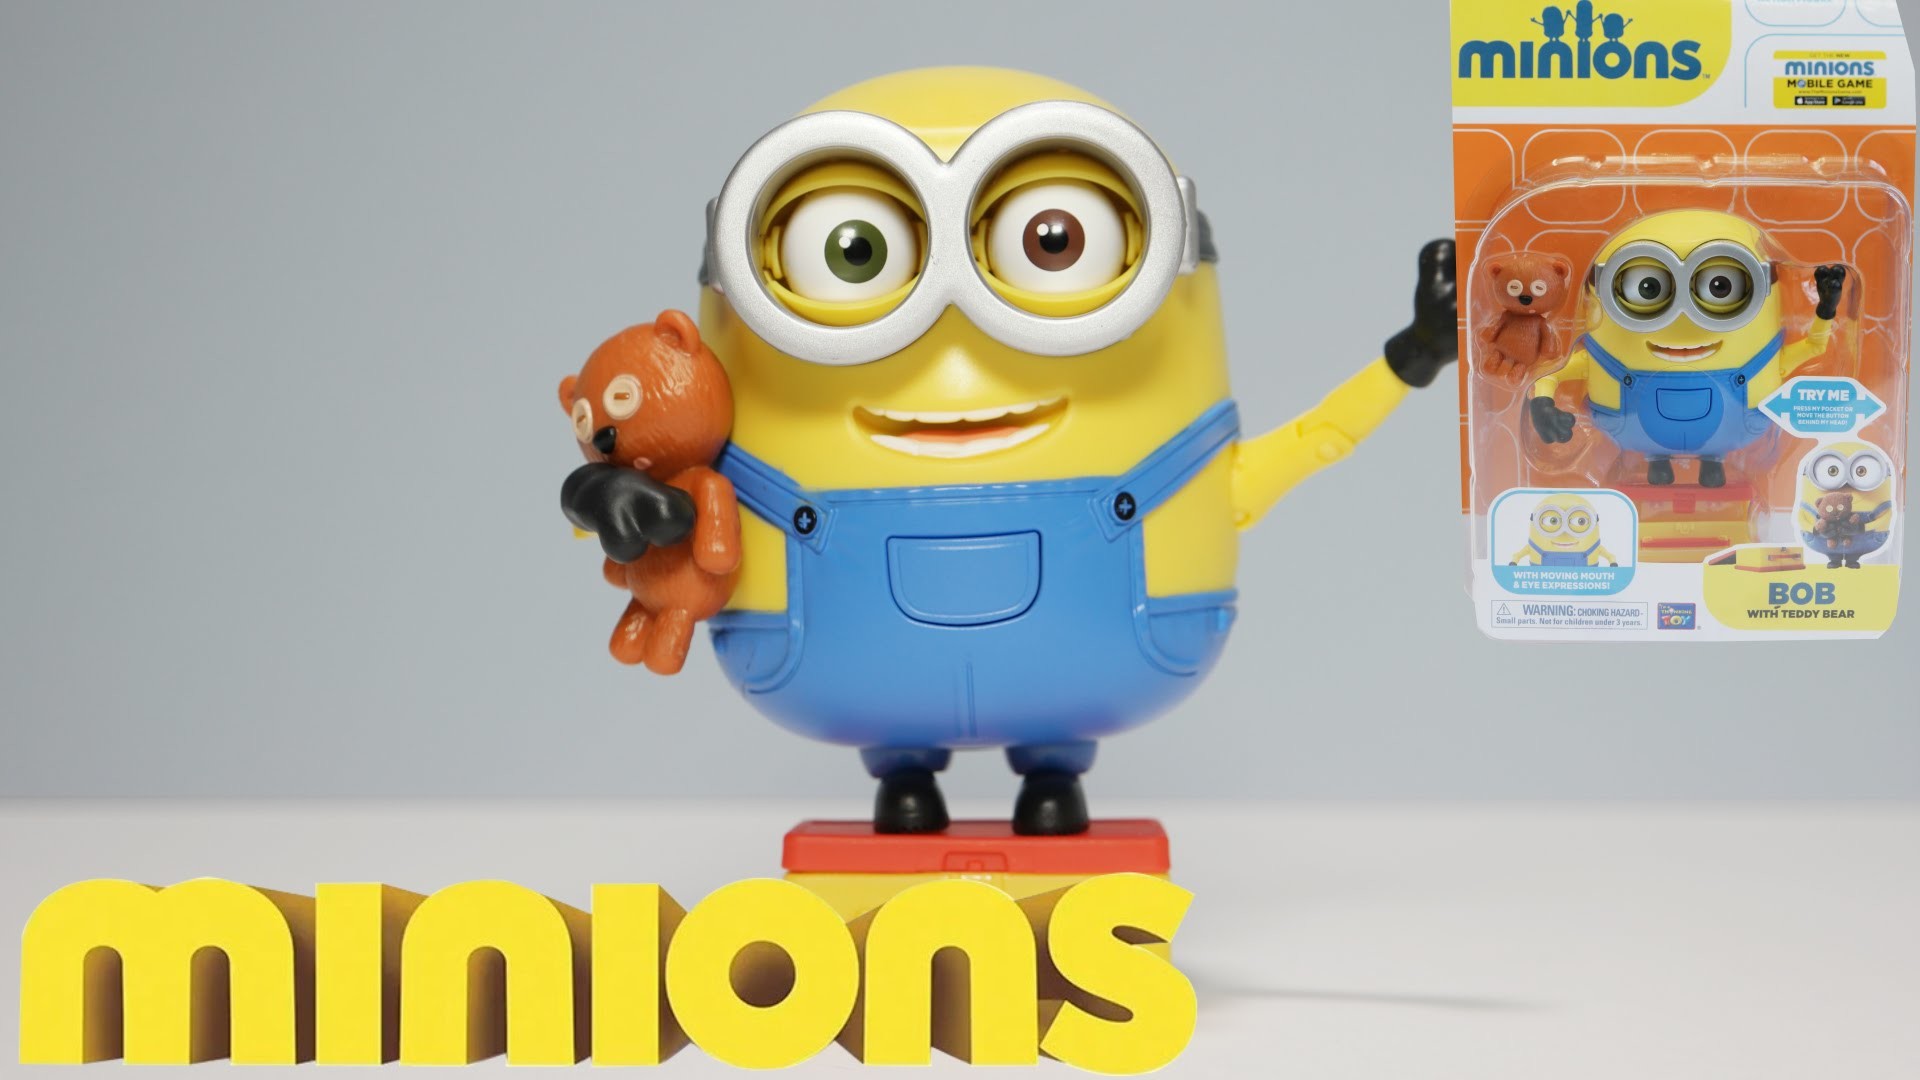 BOB WITH TEDDY BEAR MINION – POSABLE, New 2015 Minions Movie Exclusive Toys UHD 4K – YouTube